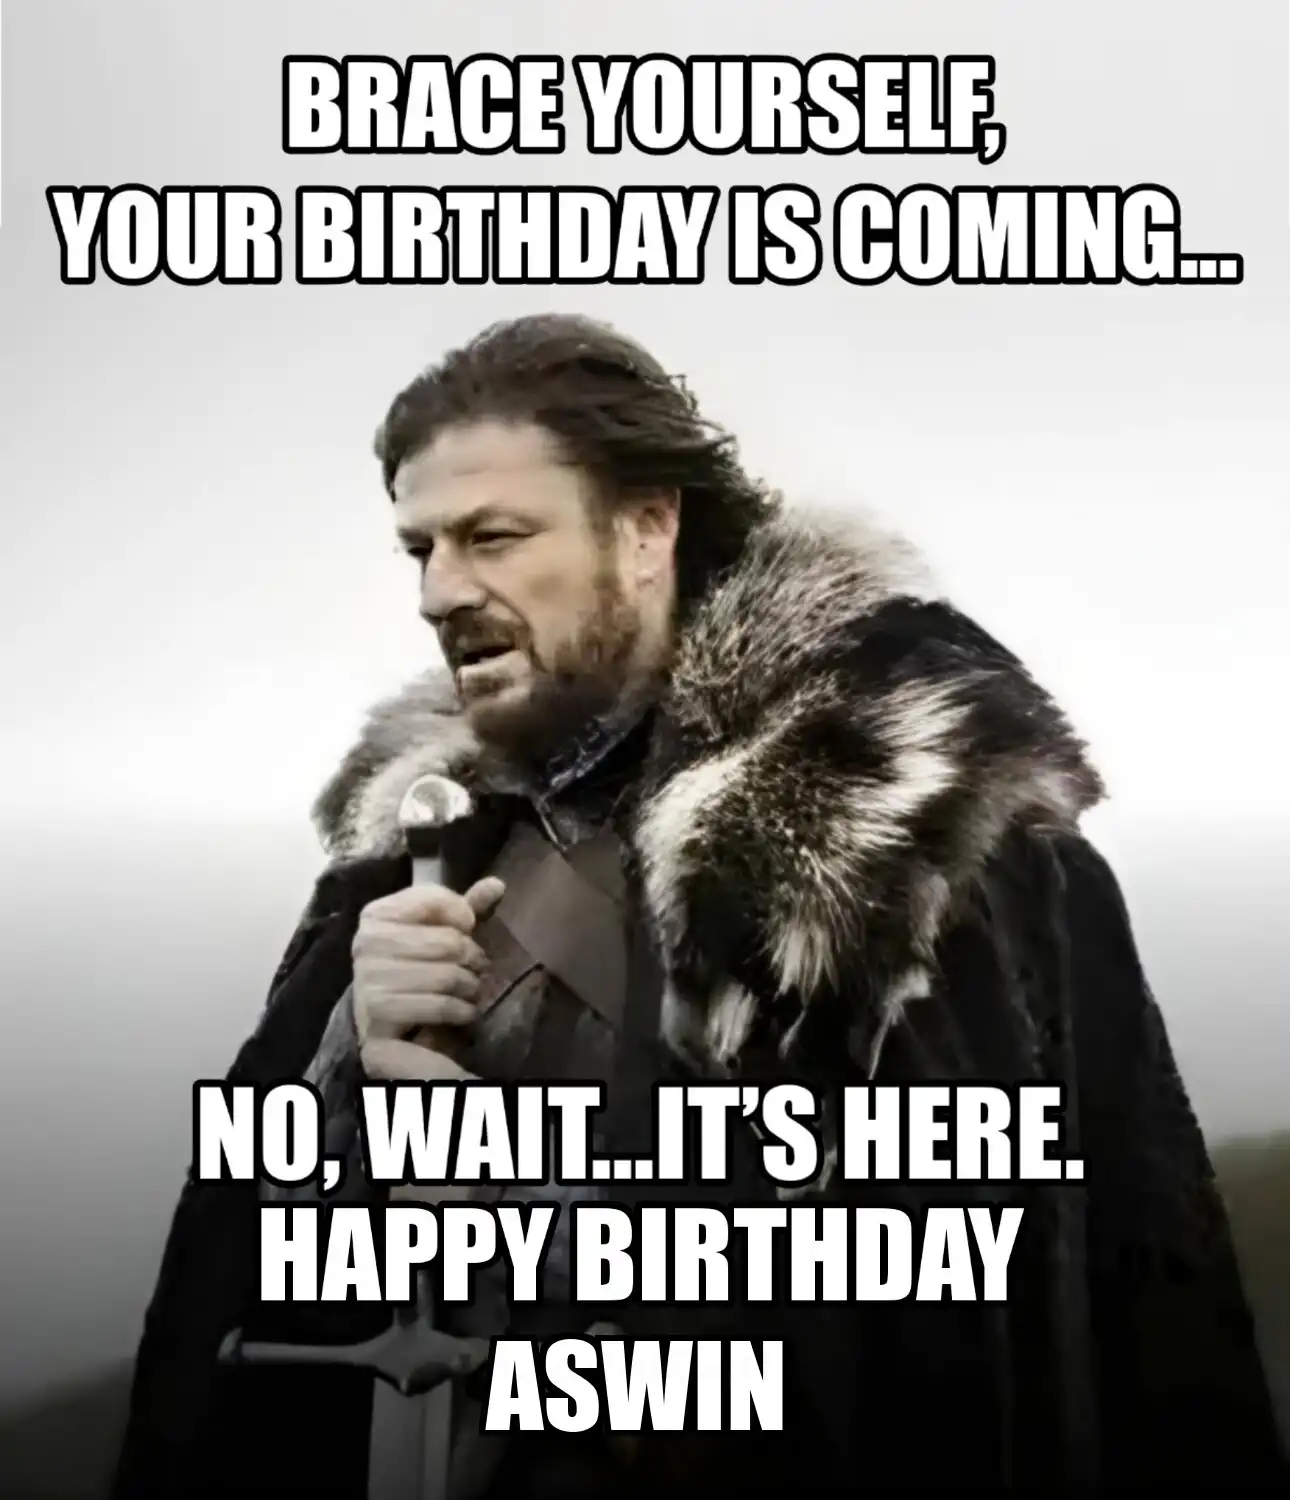 Happy Birthday Aswin Brace Yourself Your Birthday Is Coming Meme